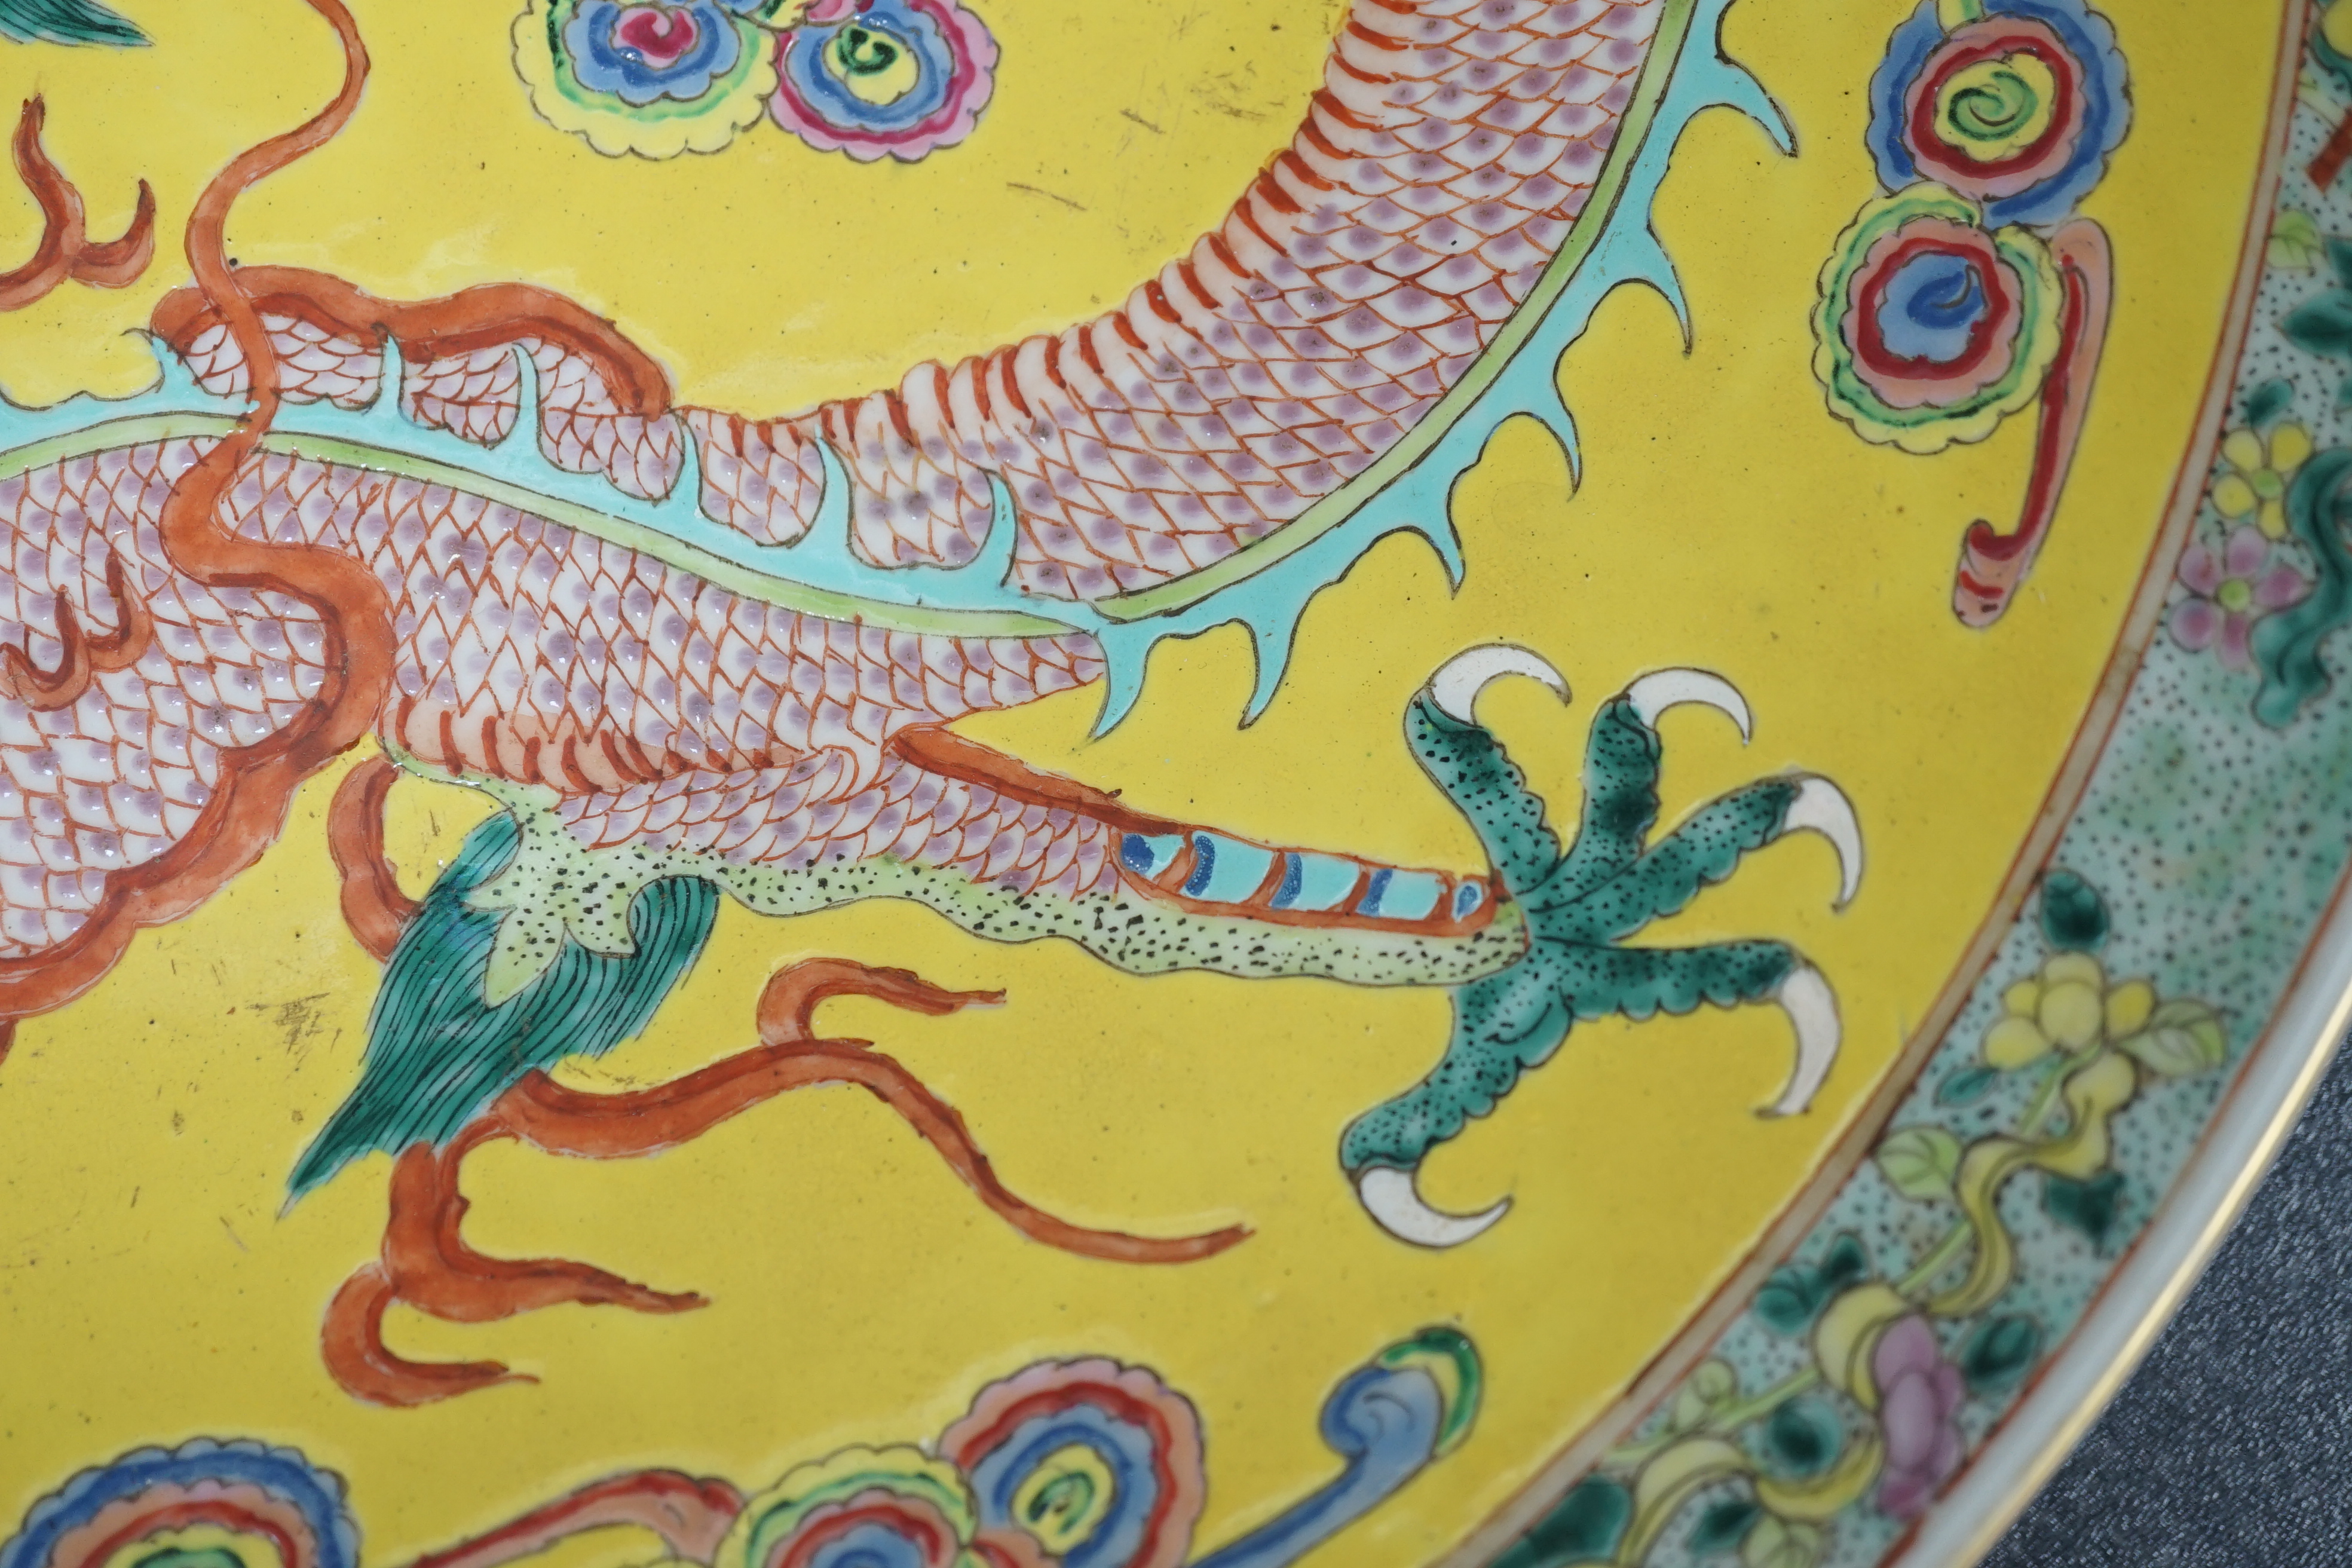 A Chinese yellow ground ‘dragon’ dish, late 19th century, minor damage